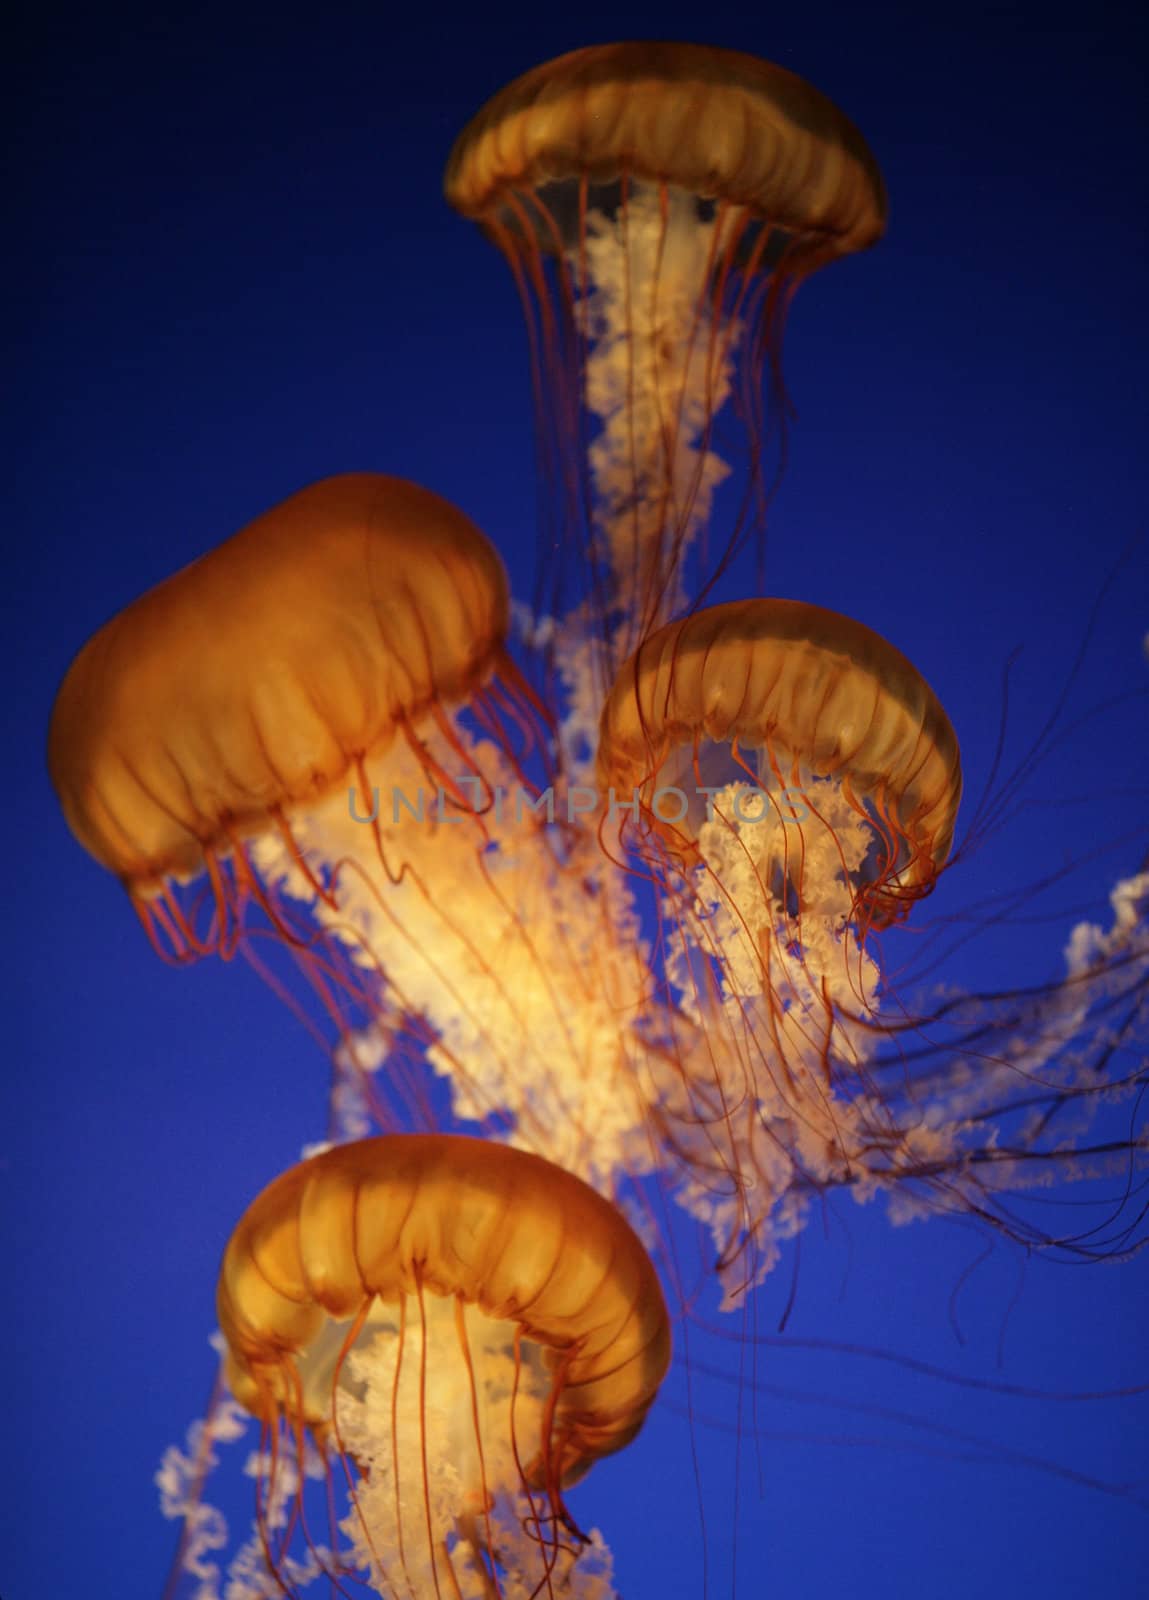 Sea nettle jelly fish by RainerPlendl